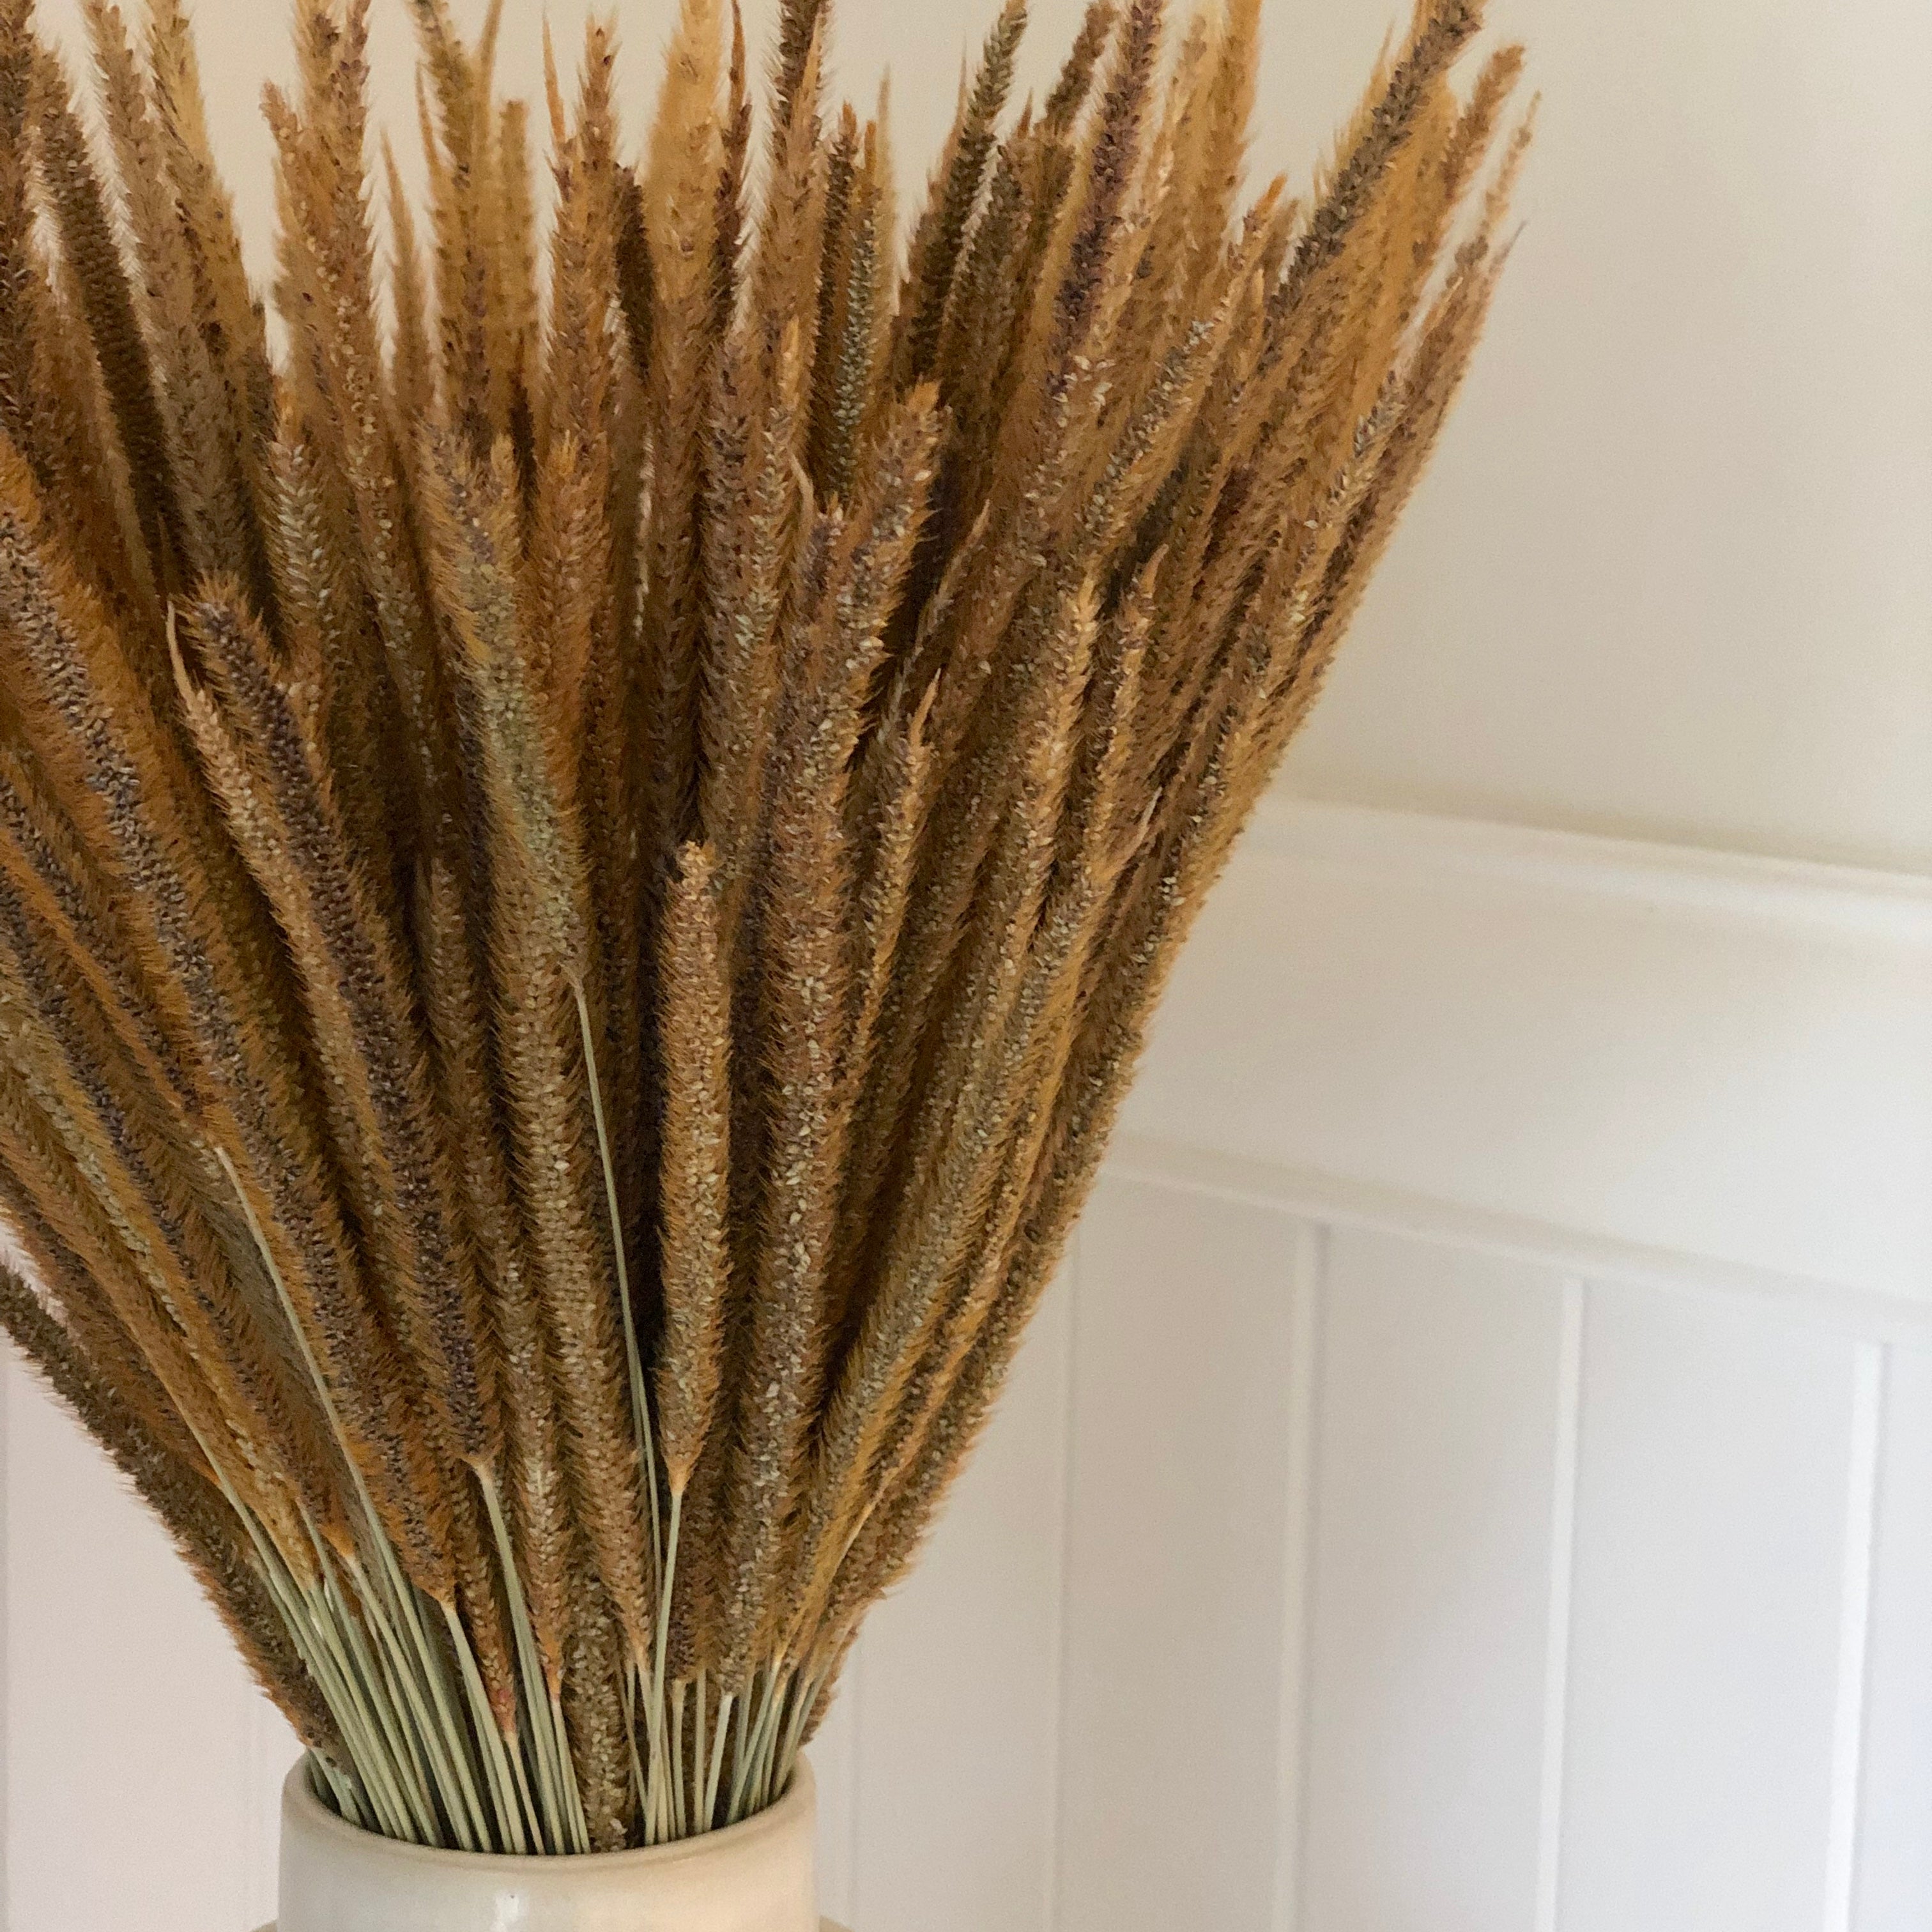 Dried Kirin Grass Stems x 10 pcs - Natural